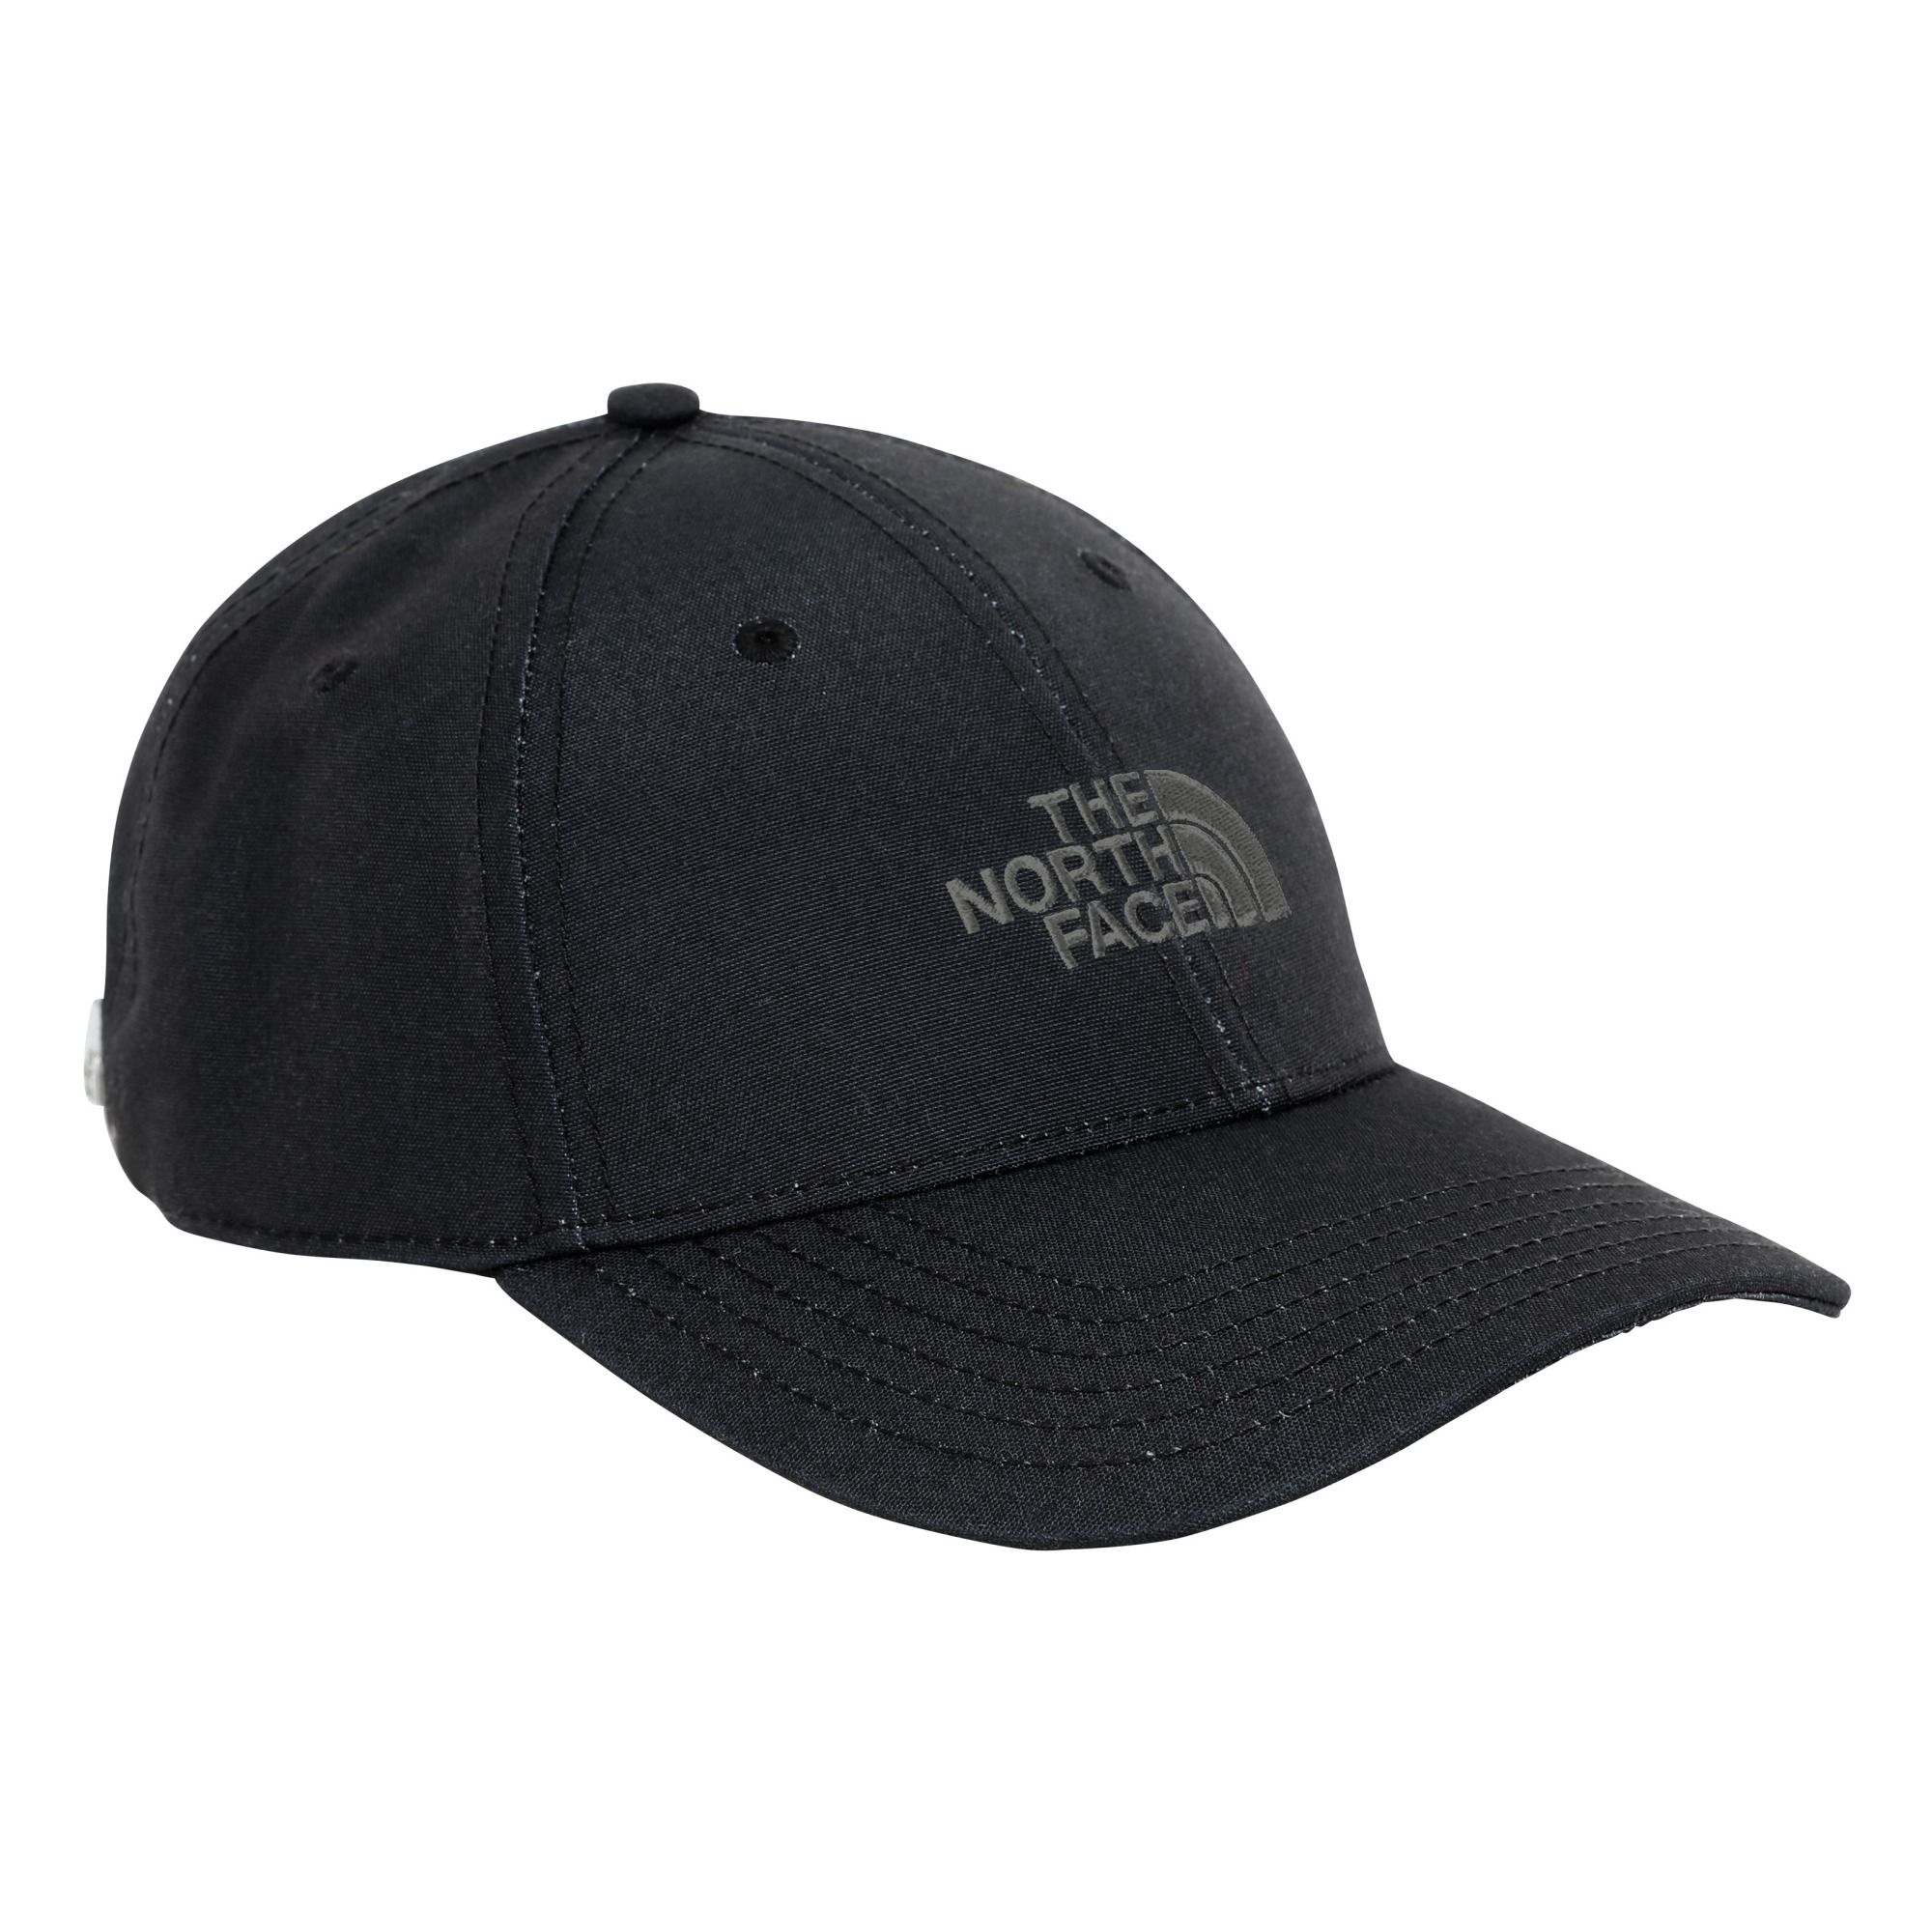 The North Face - Casquette Logo - Collection Homme - - Homme - Noir